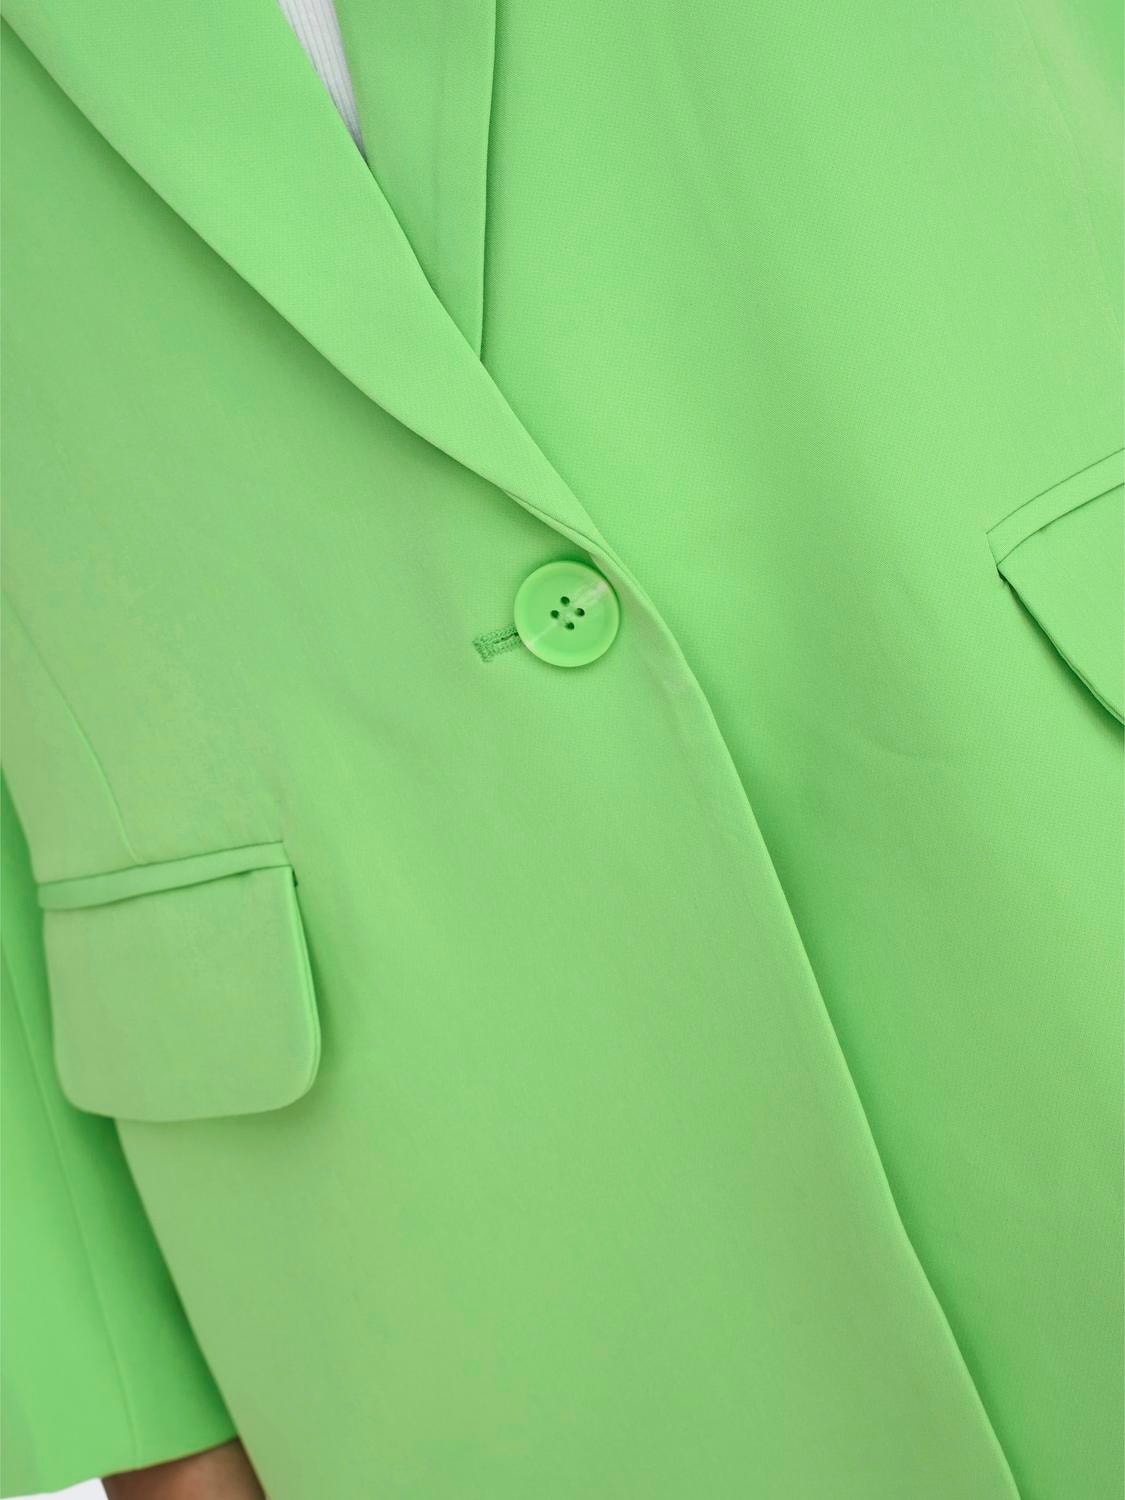 ONLY Lang basic blazer -Summer Green - 15245698